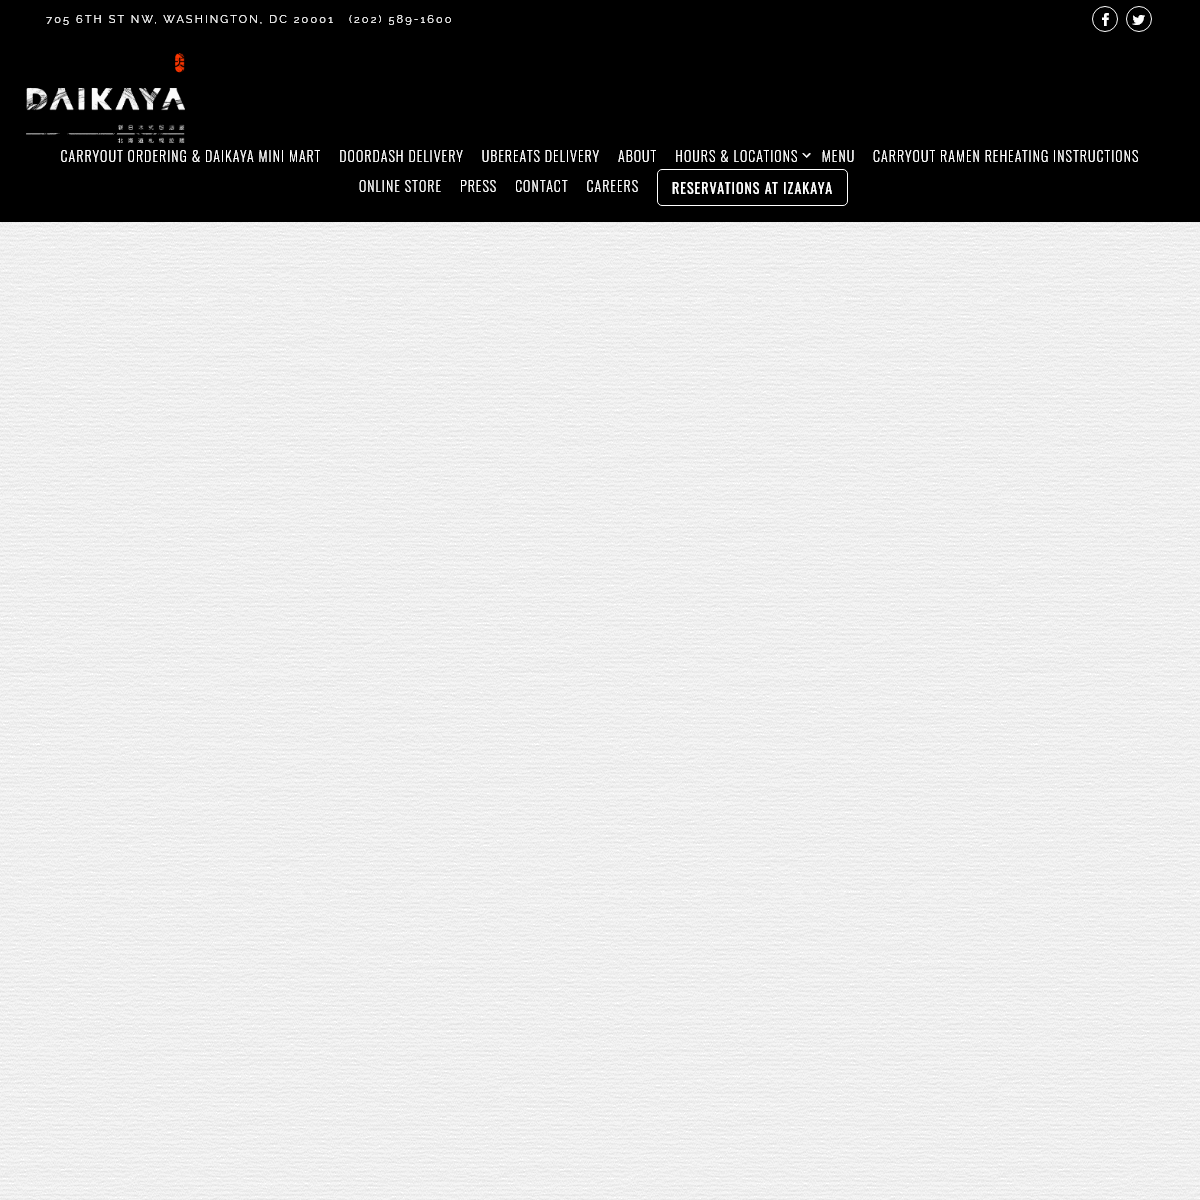 A complete backup of daikaya.com